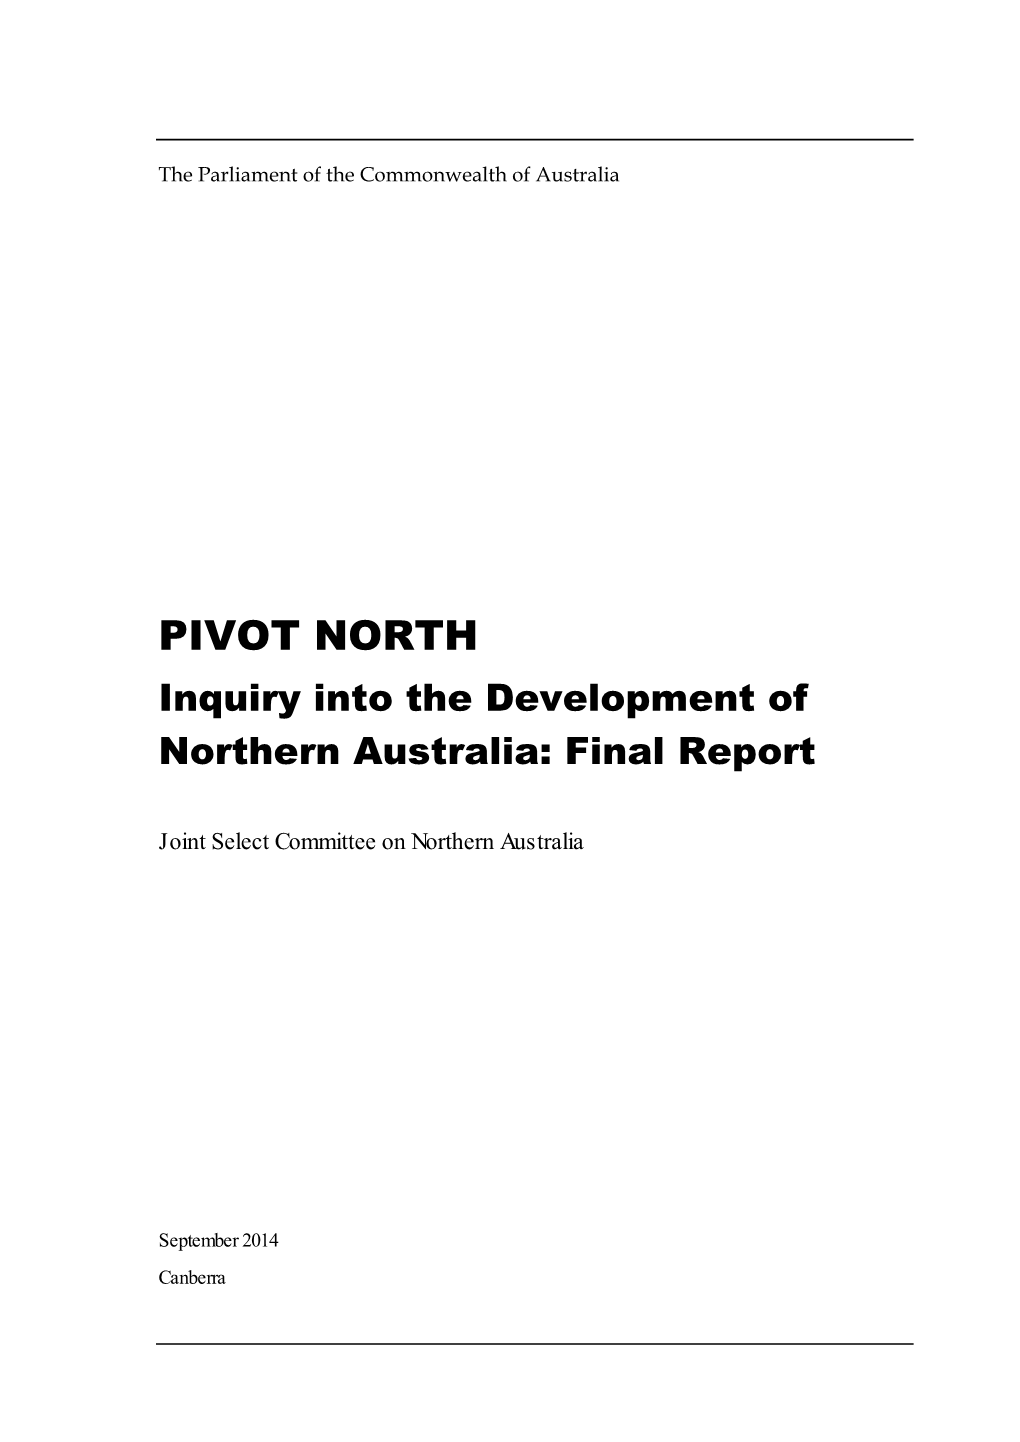 Pivot North: Inquiry Into the Development of Northern Australia